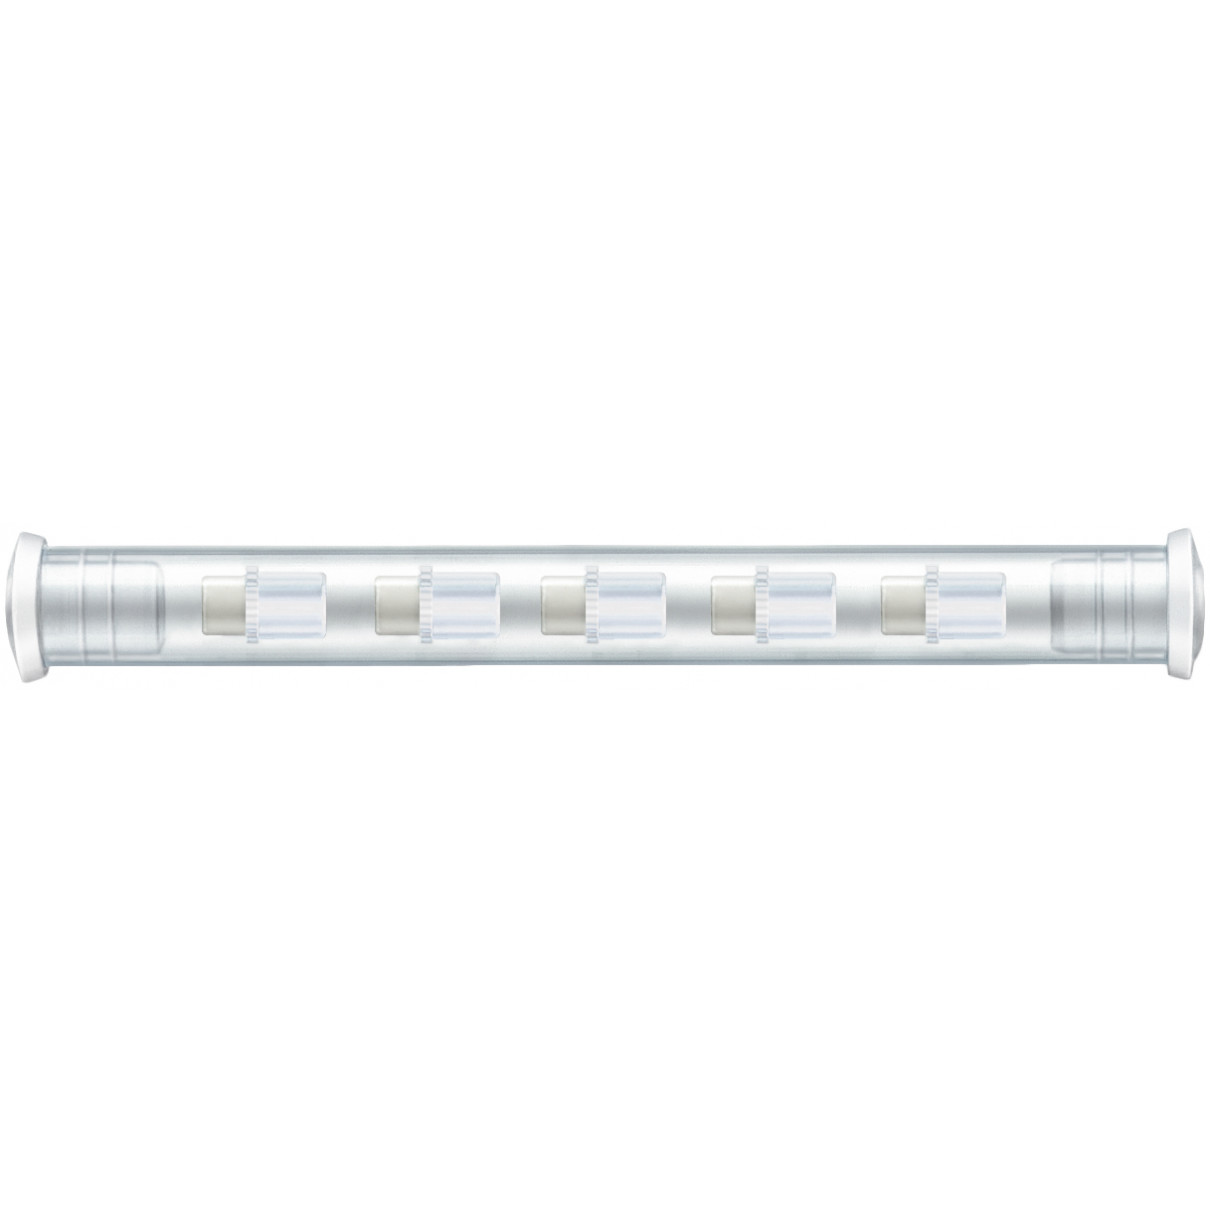 Staedtler Eraser for 775/79 Pencils - White (Tube of 5)